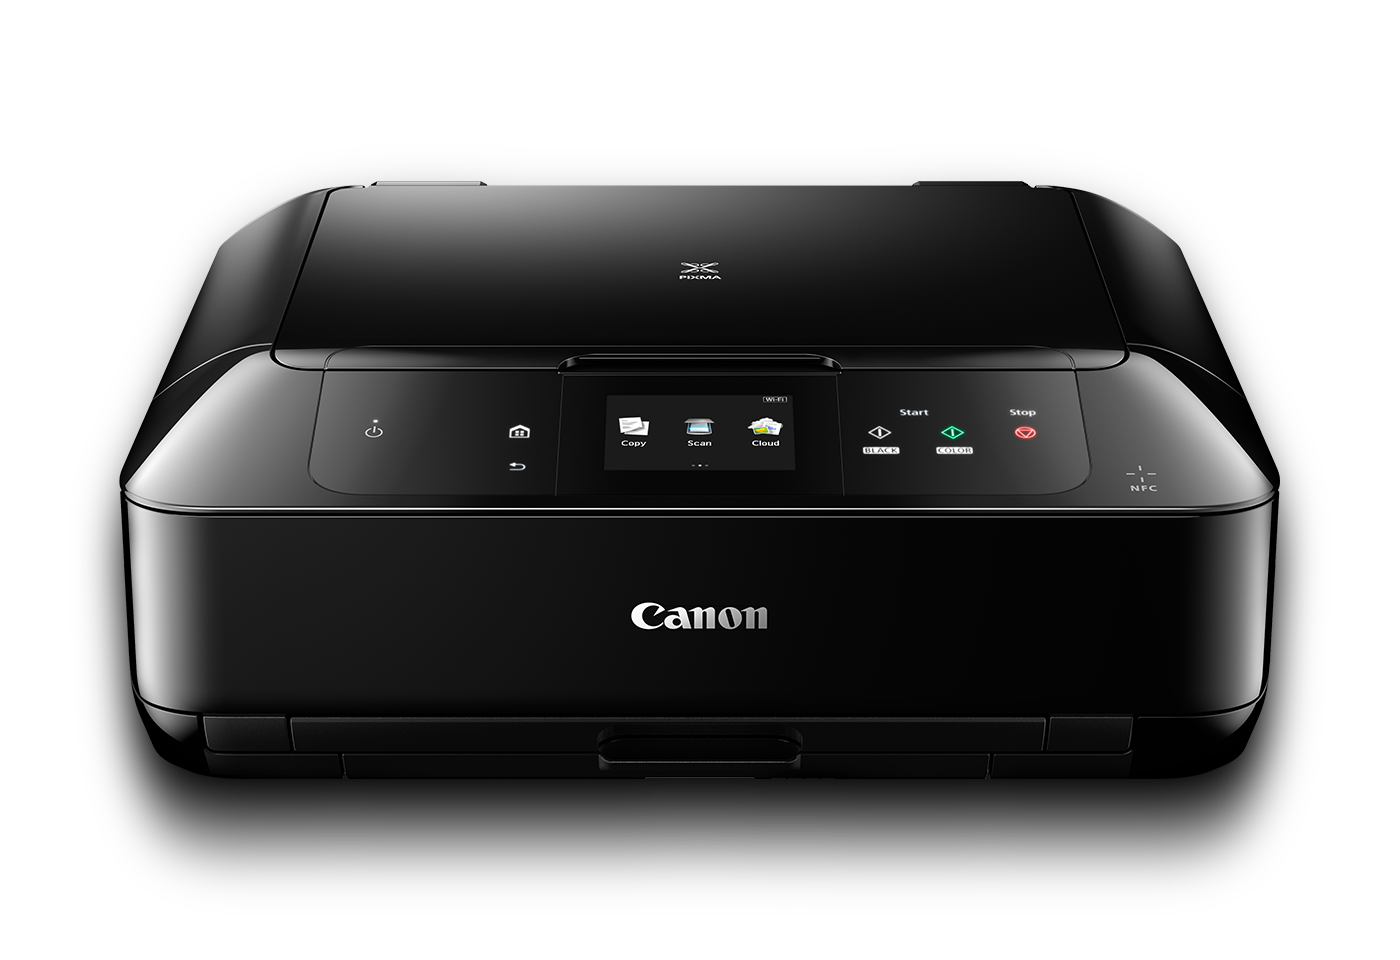 Canon PIXMA MG7760 Inkjet All-in-One printer black front